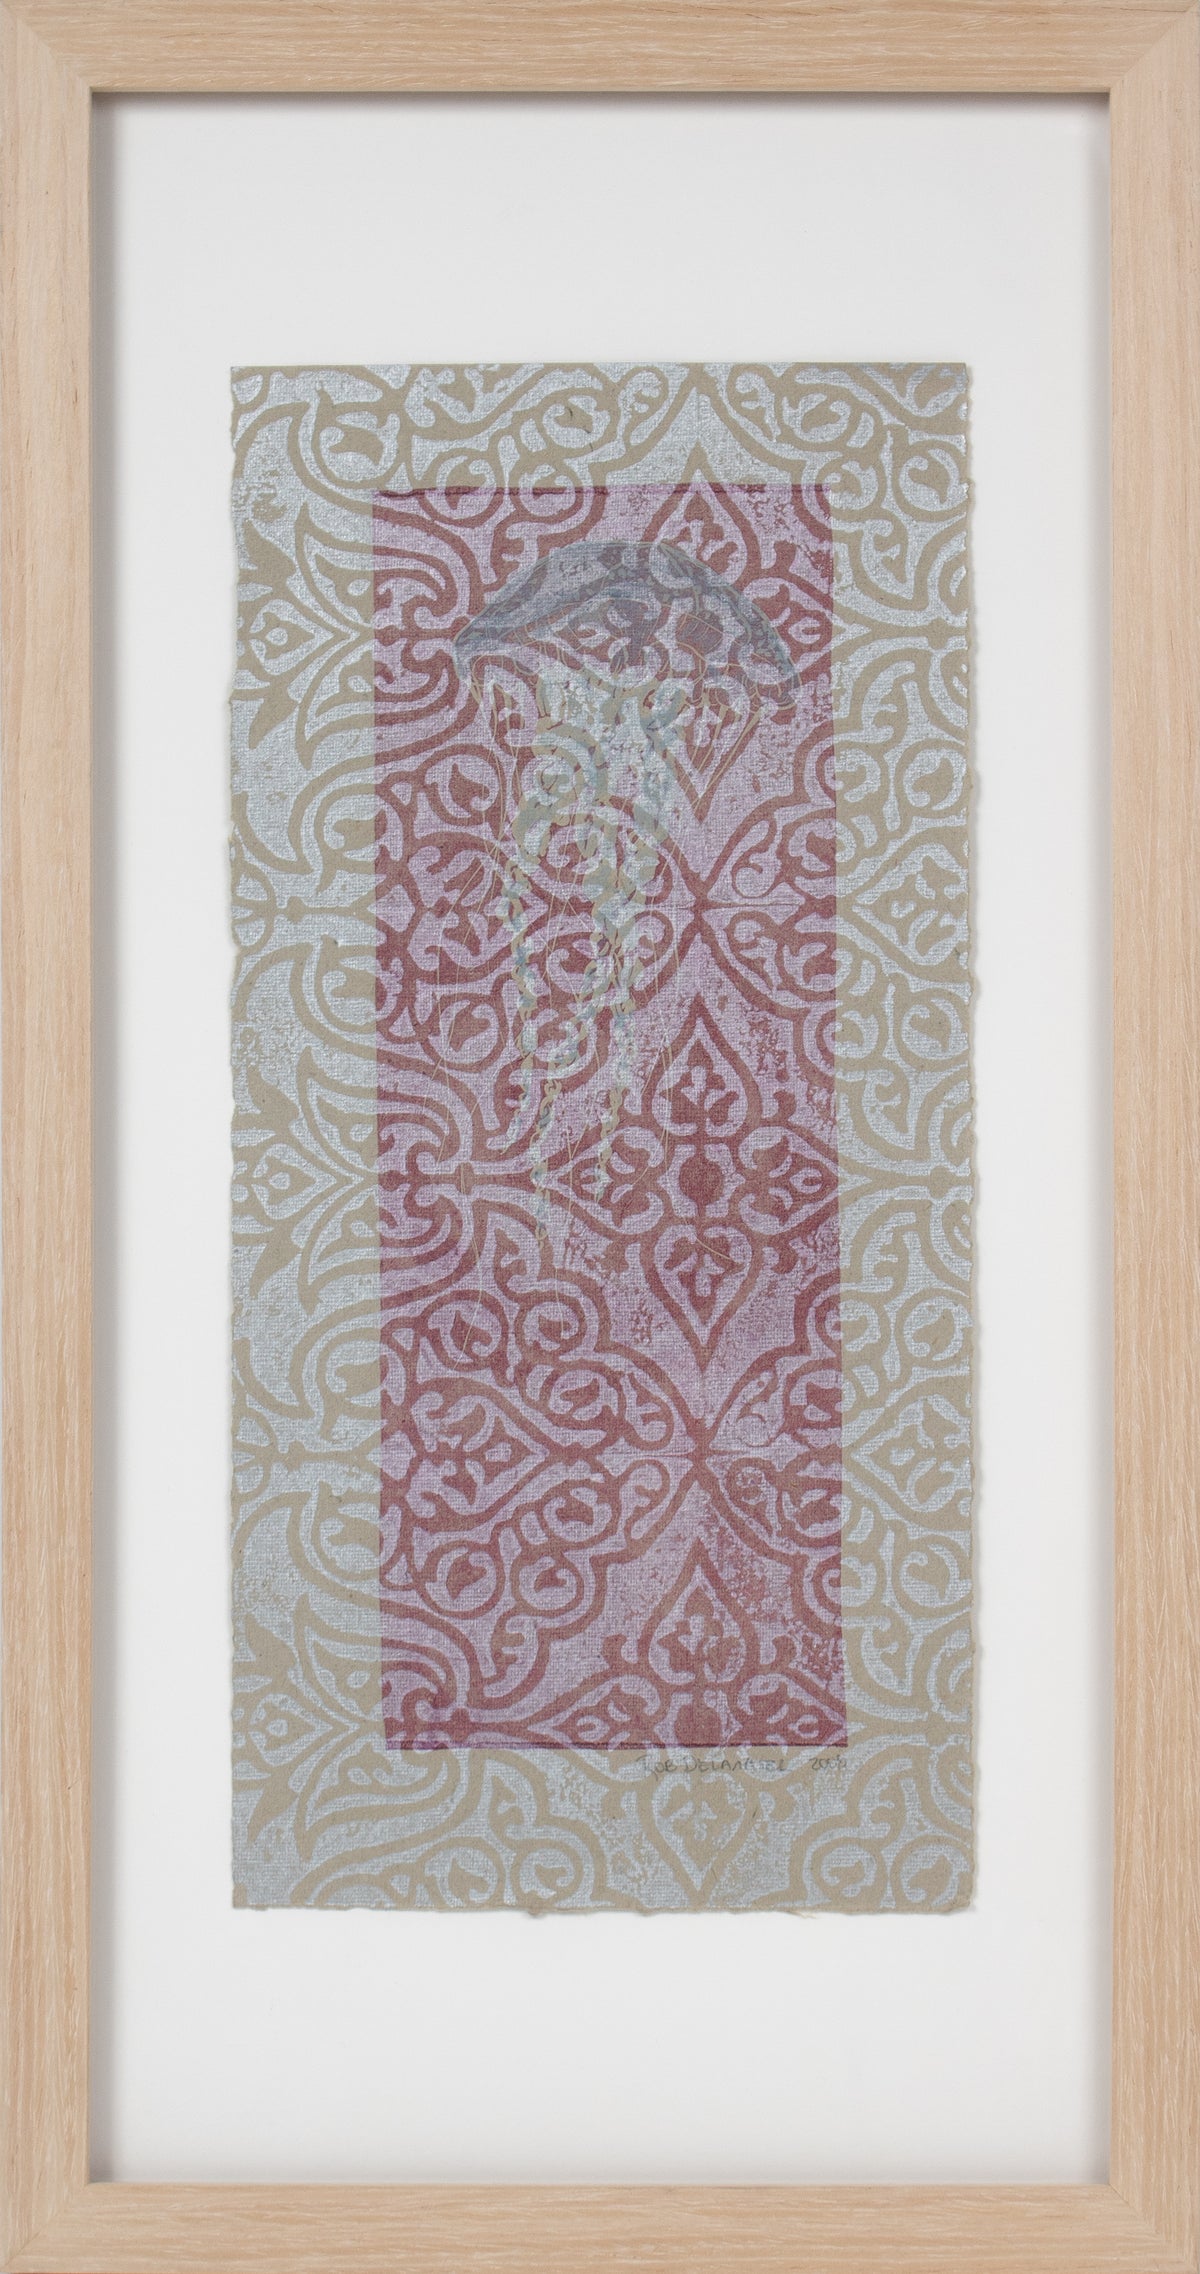 Jellyfish in Abstraction &lt;br&gt;2008 Linoleum Block Print &lt;br&gt;&lt;br&gt;#15453